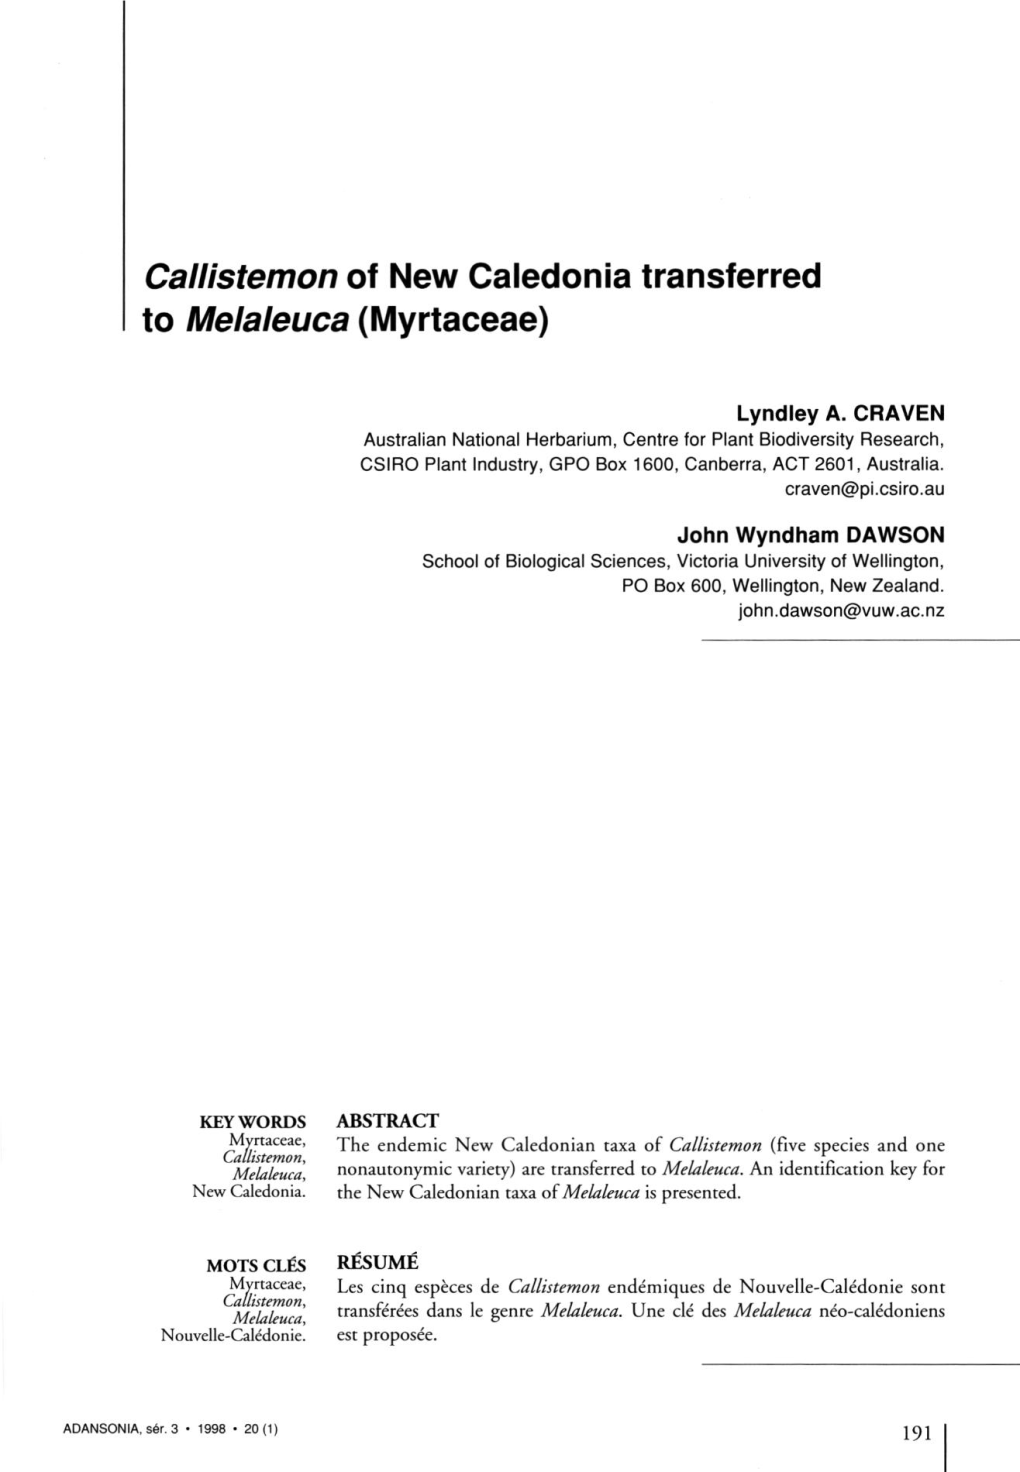 Callistemon of New Caledonia Transferred to Melaleuca (Myrtaceae)